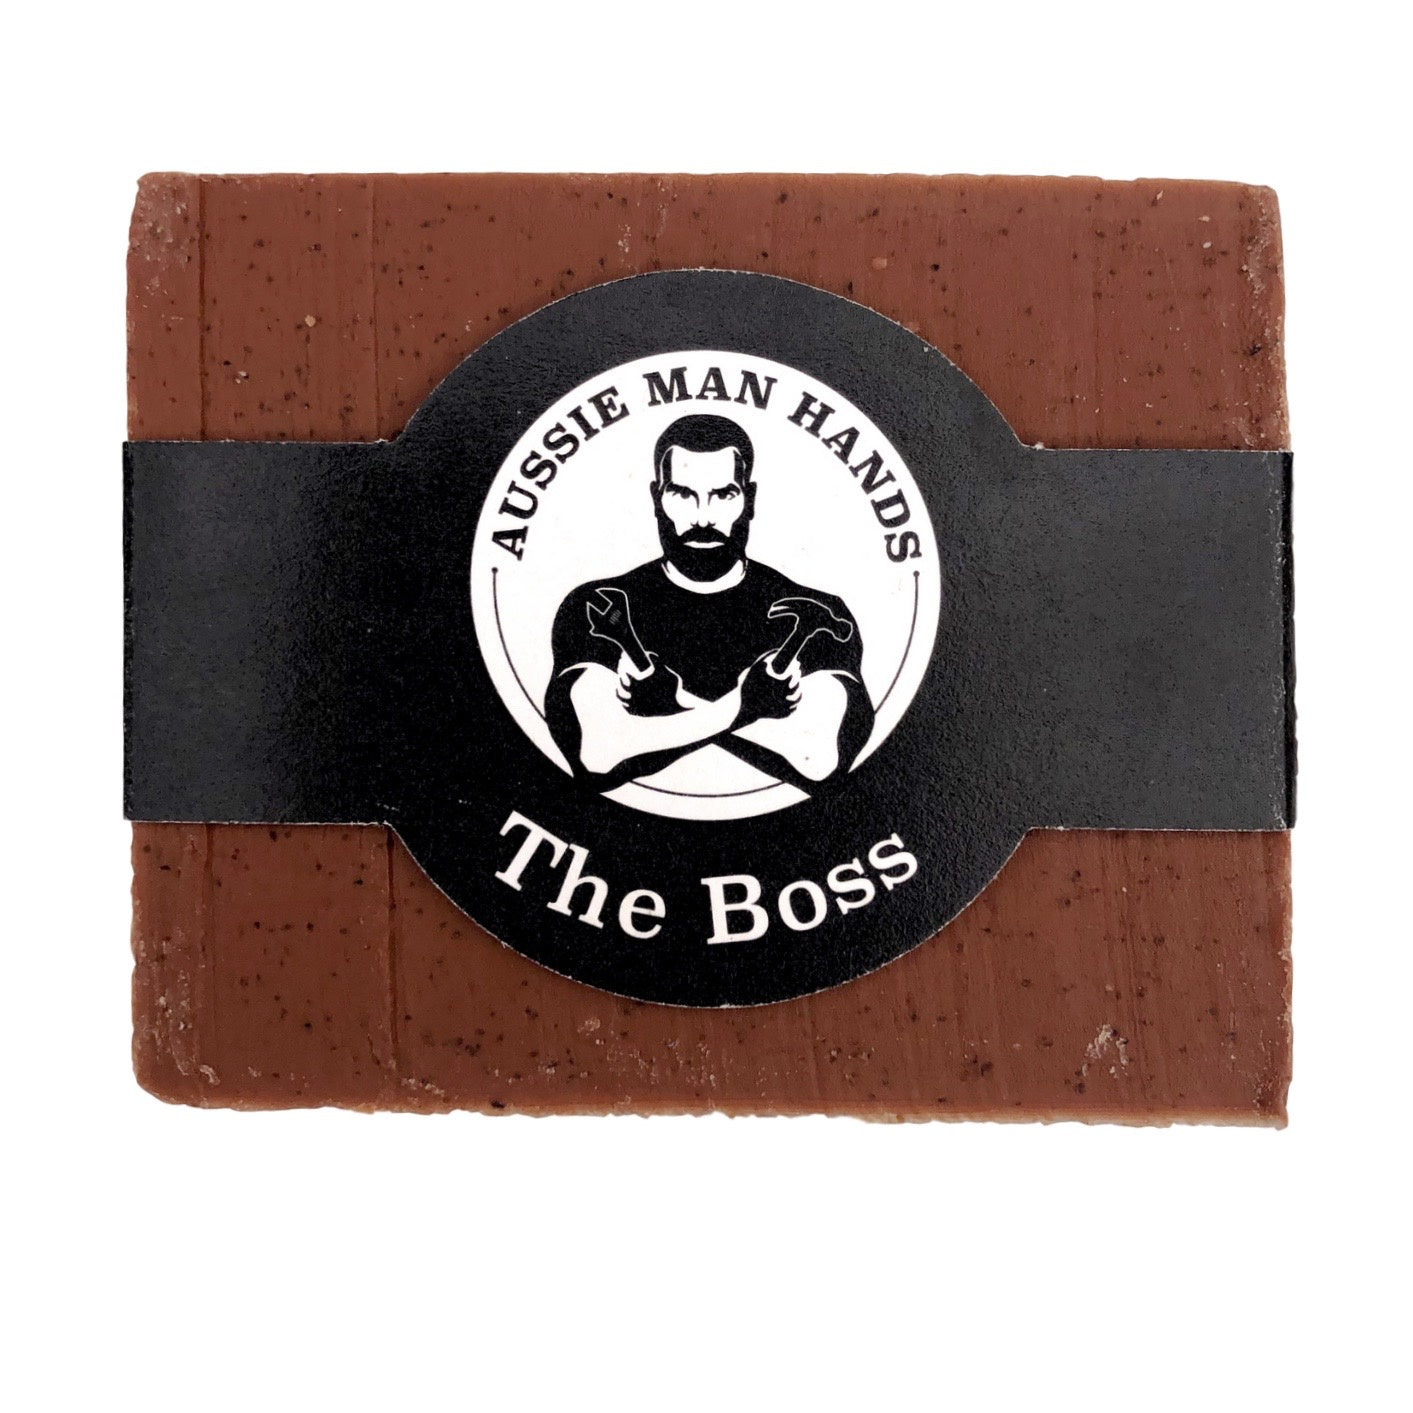 Men's Natural Soap - The Boss